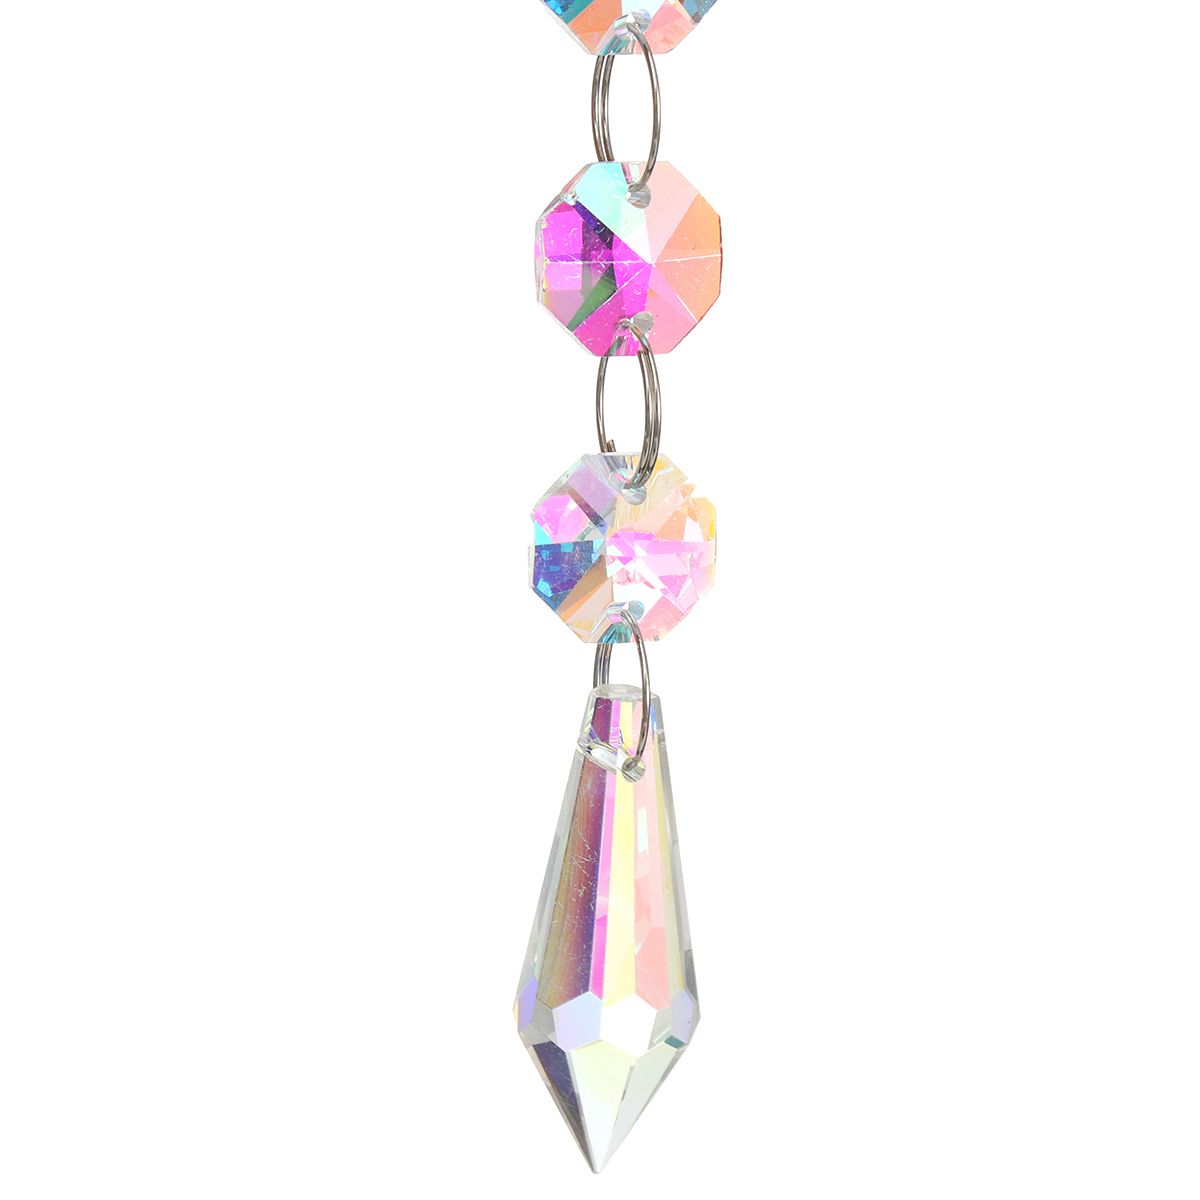 Crystal-Lighting-Ball-Pendant-Beads-Chandelier-Hanging-Drop-Prisms-Suncatcher-1674742